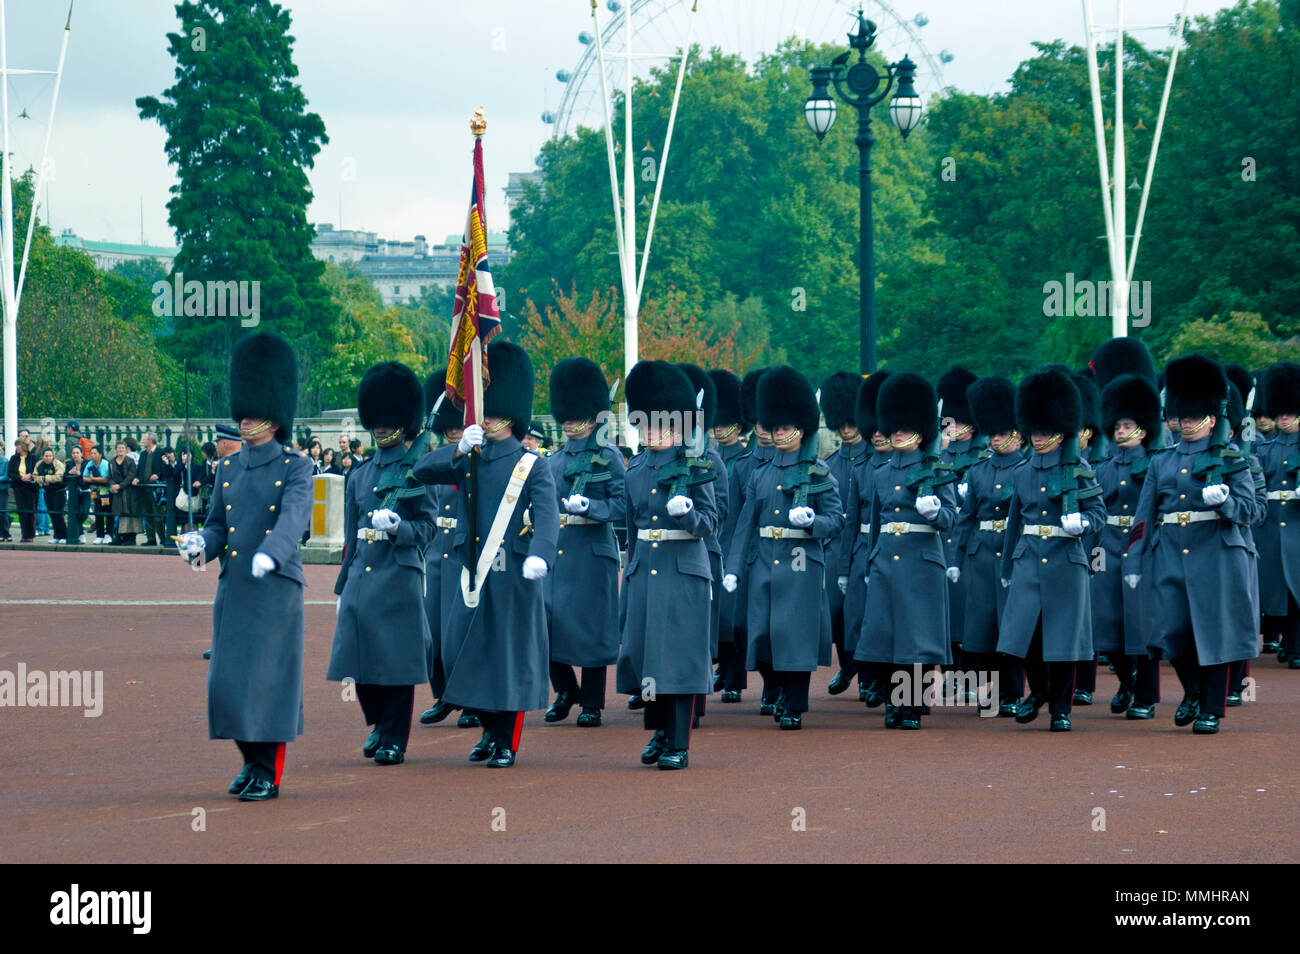 Zeremonie der Wechsel der Royal Guard am Buckingham Palace, London, England Stockfoto